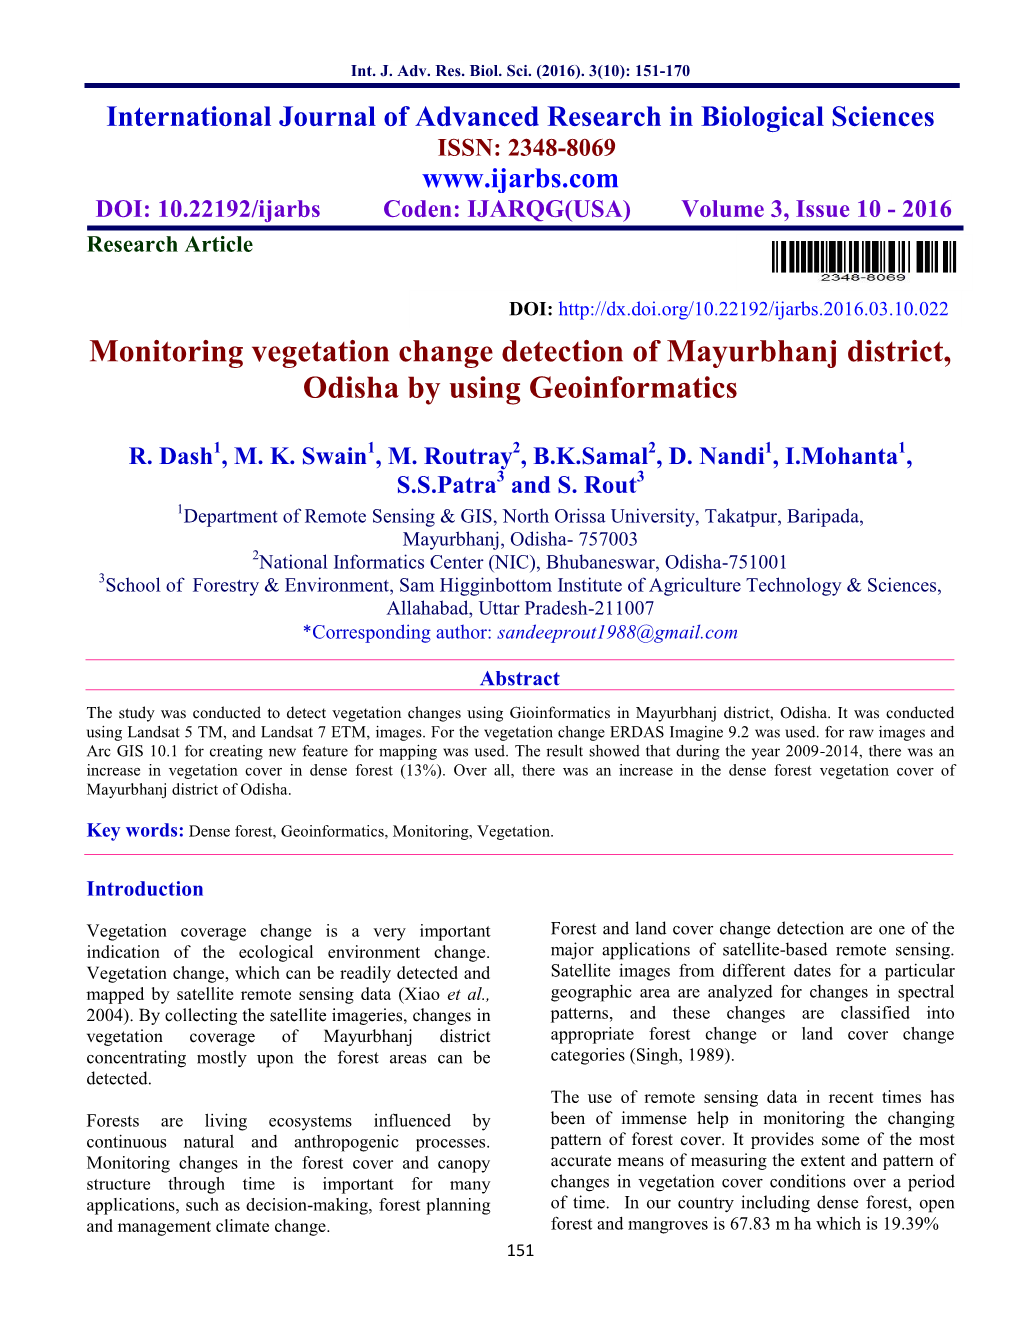 Monitoring Vegetation Change Detection of Mayurbhanj District, Odisha by Using Geoinformatics